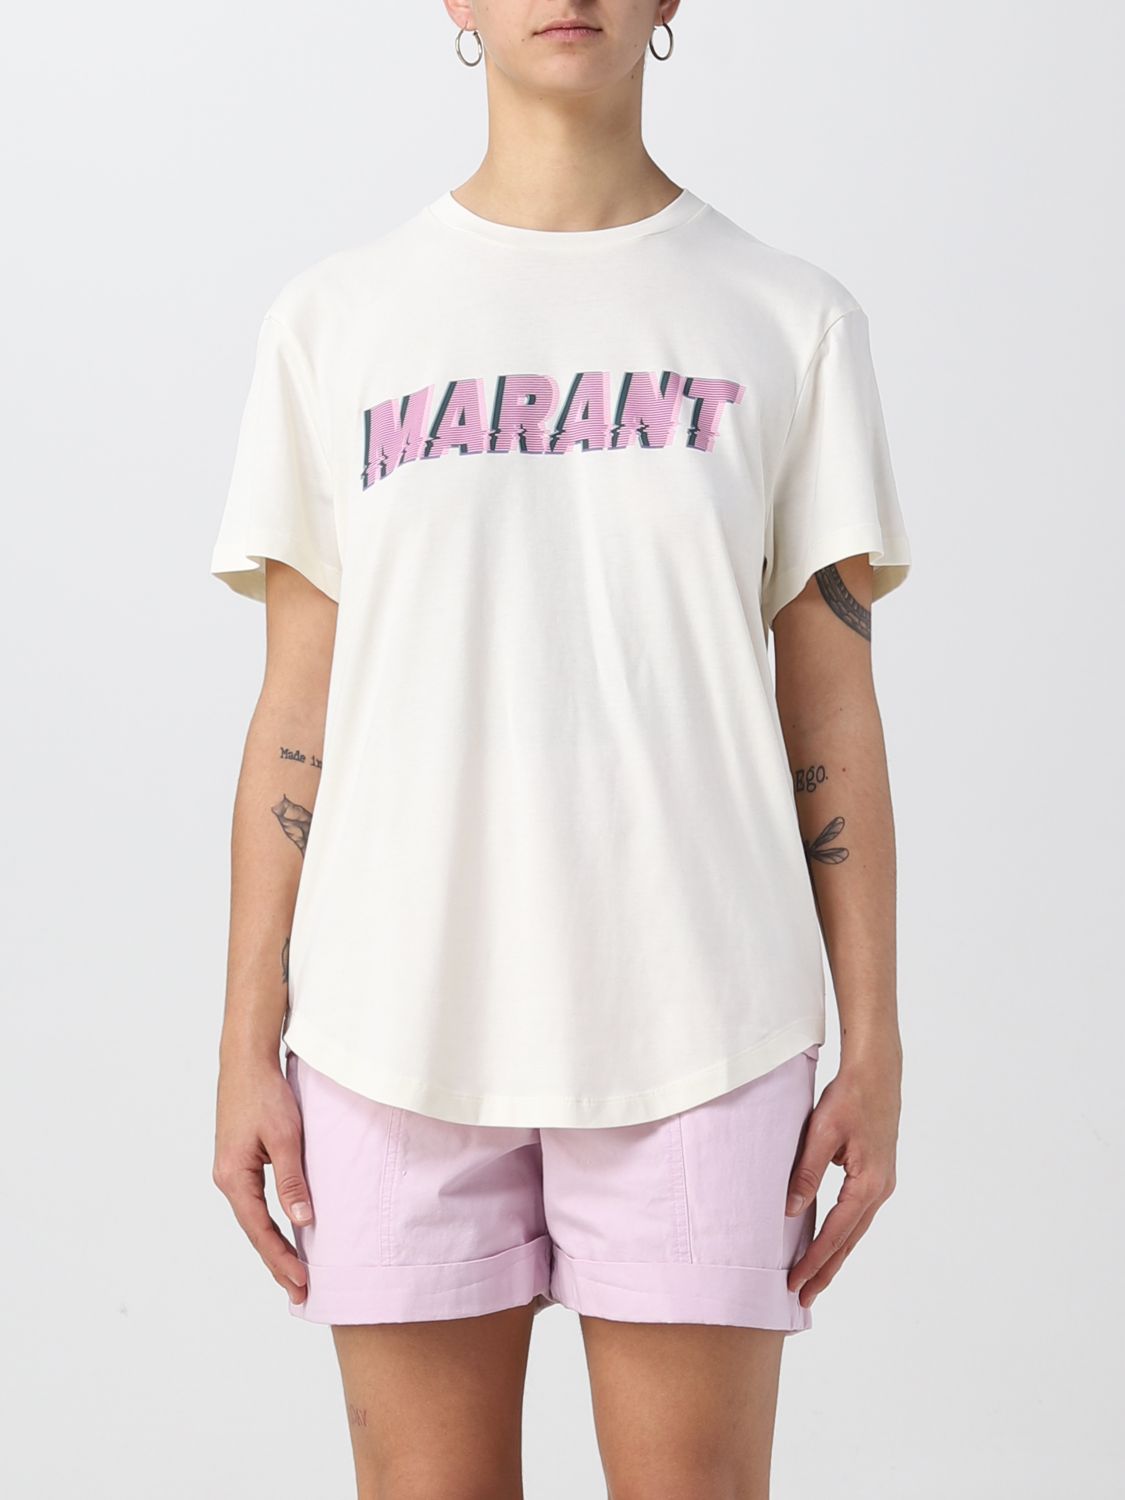 ISABEL MARANT ETOILE: t-shirt for woman Yellow | Isabel Marant t-shirt TS0035FAA1N91E online on GIGLIO.COM